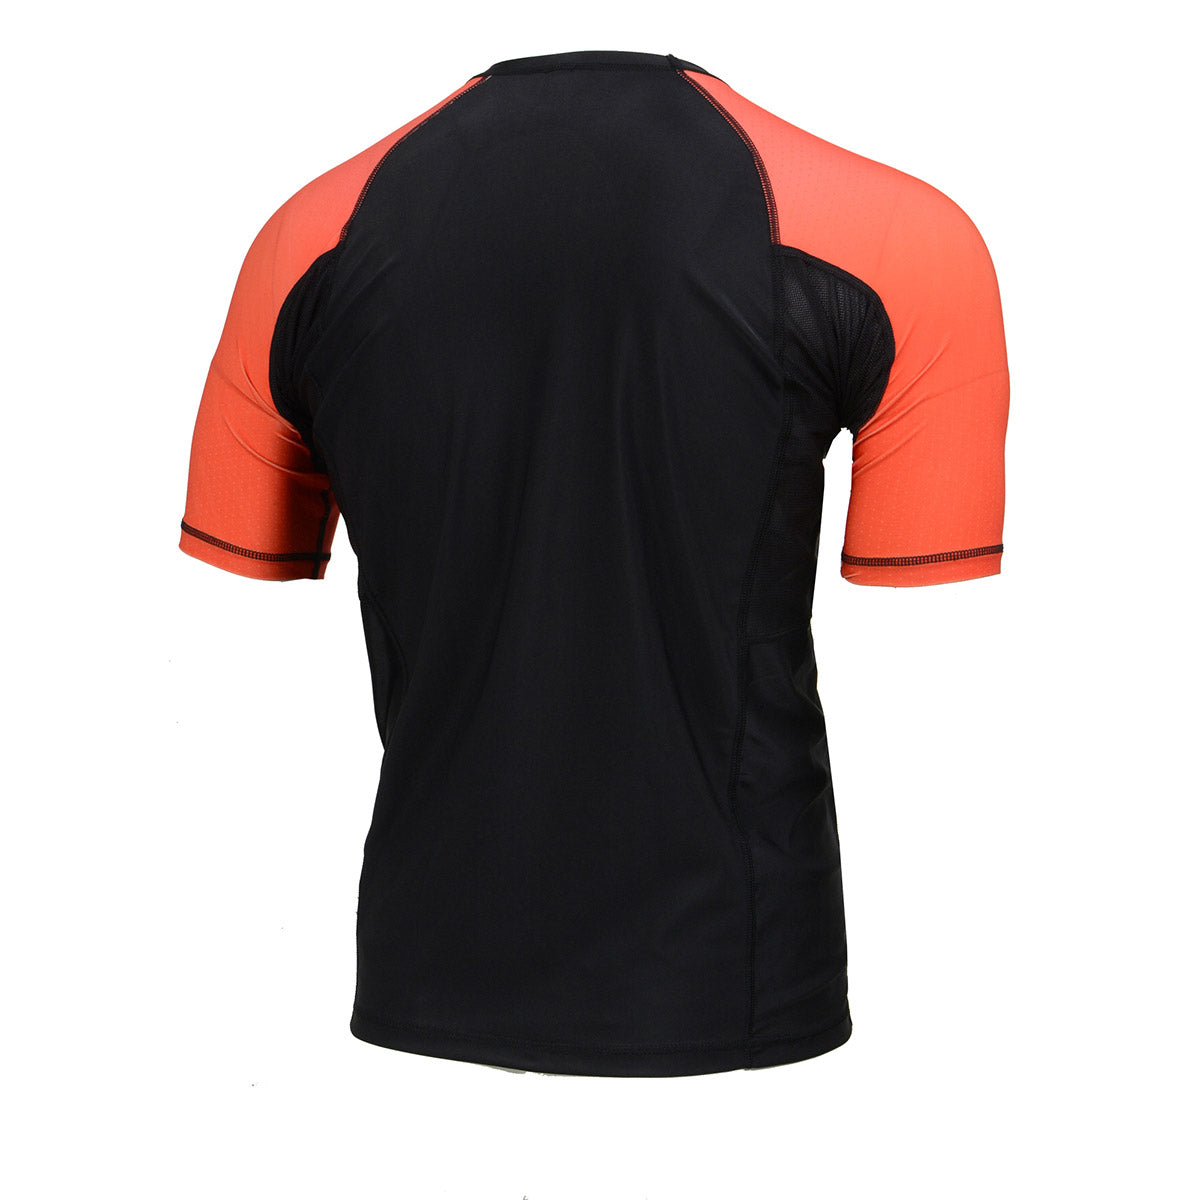 X-Fitness XFM7001 Men's Black and Red Short Sleeve Compression Rash Guard Athletic Shirt- MMA, BJJ, Wrestling, Cross Training